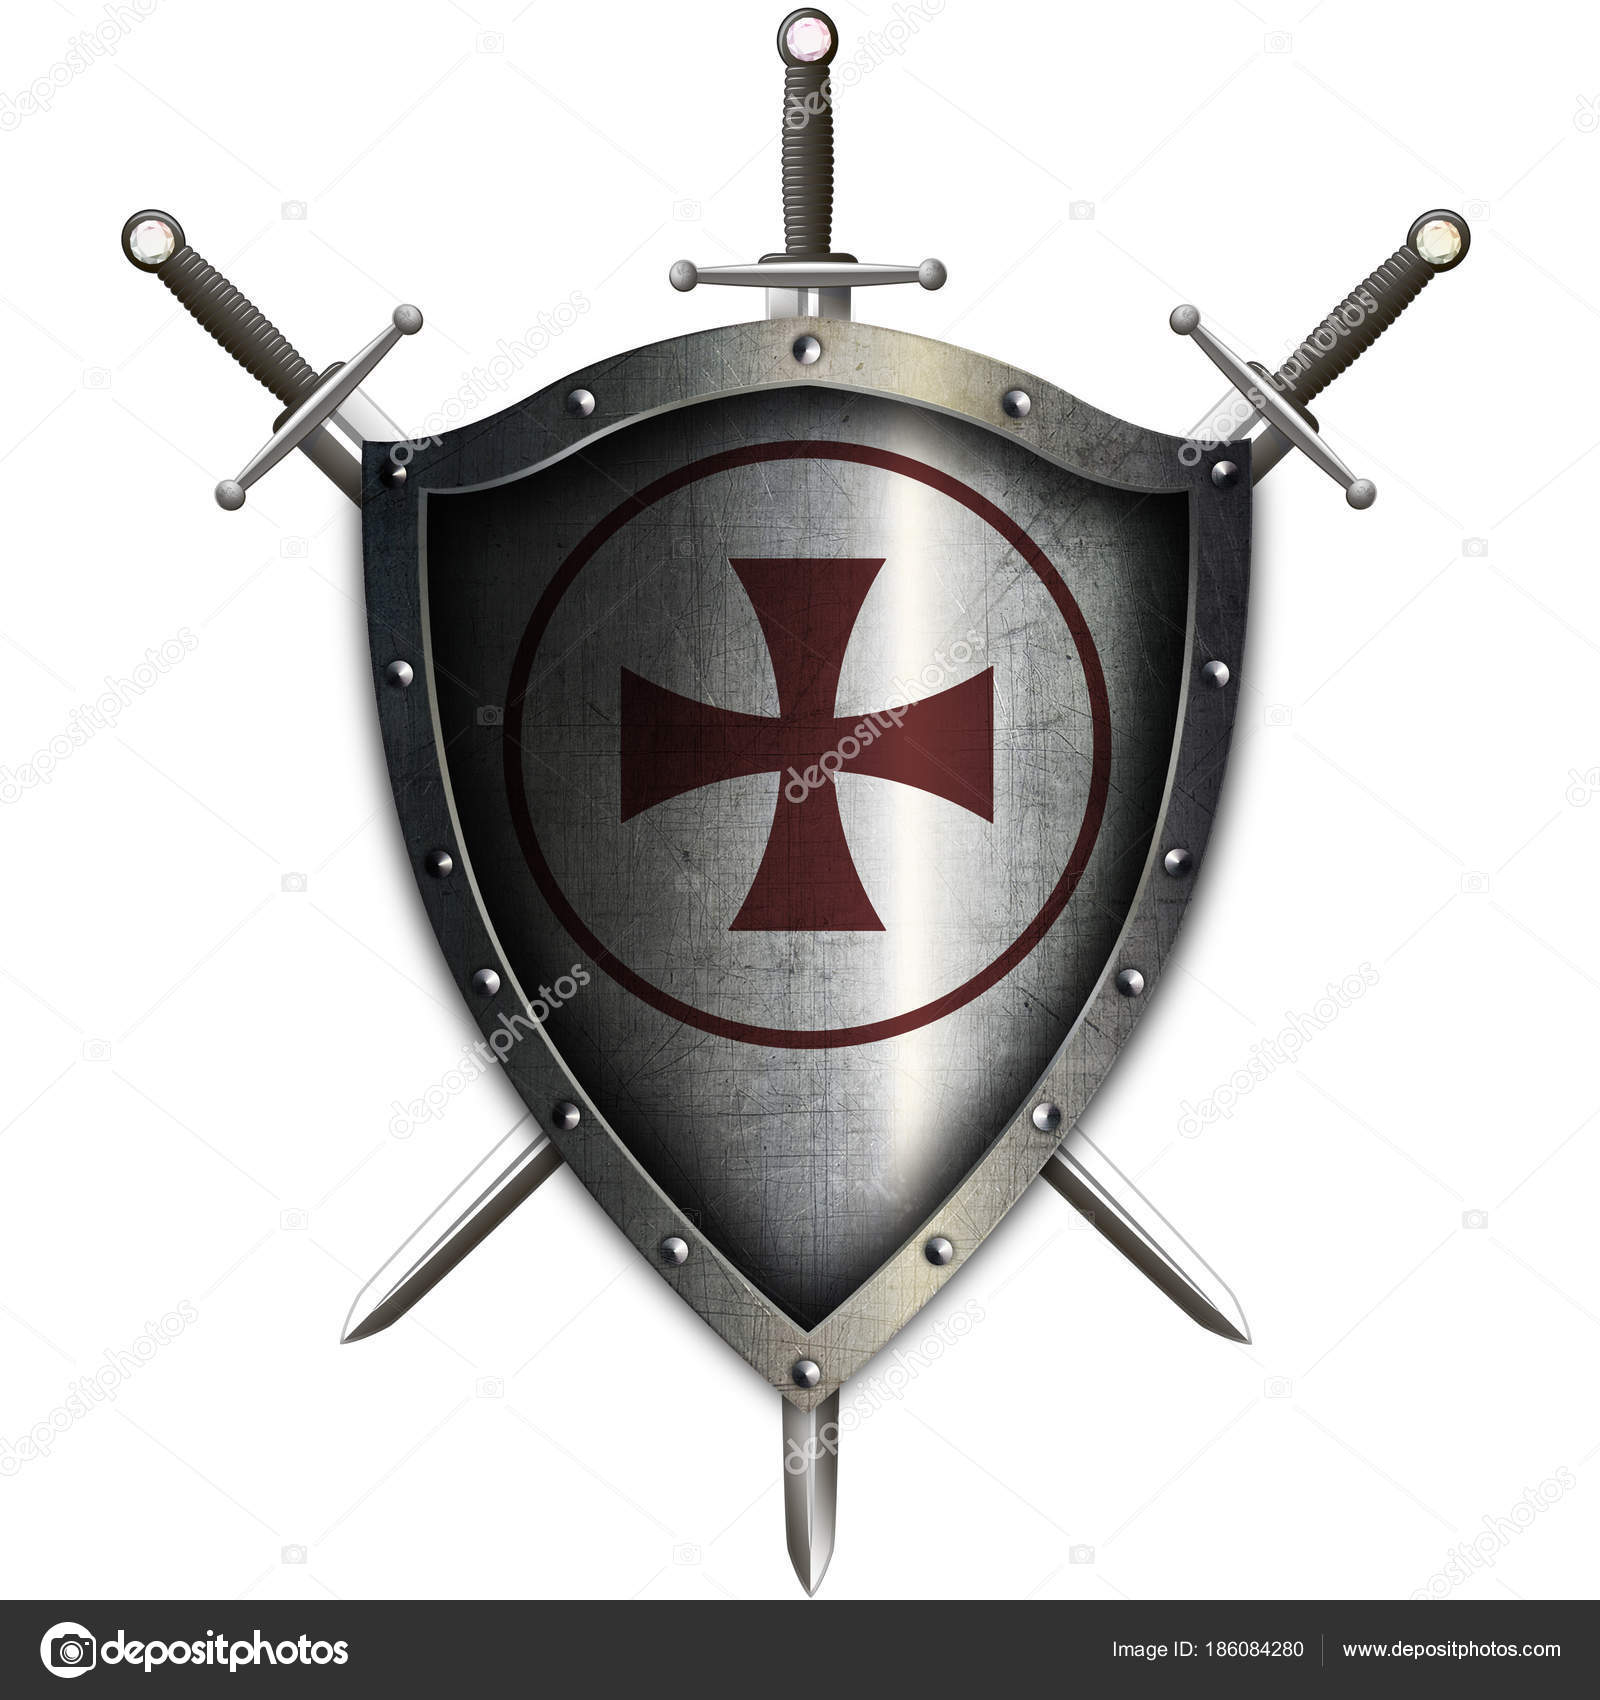 depositphotos_186084280-stock-photo-medieval-shield-with-red-cross.jpg